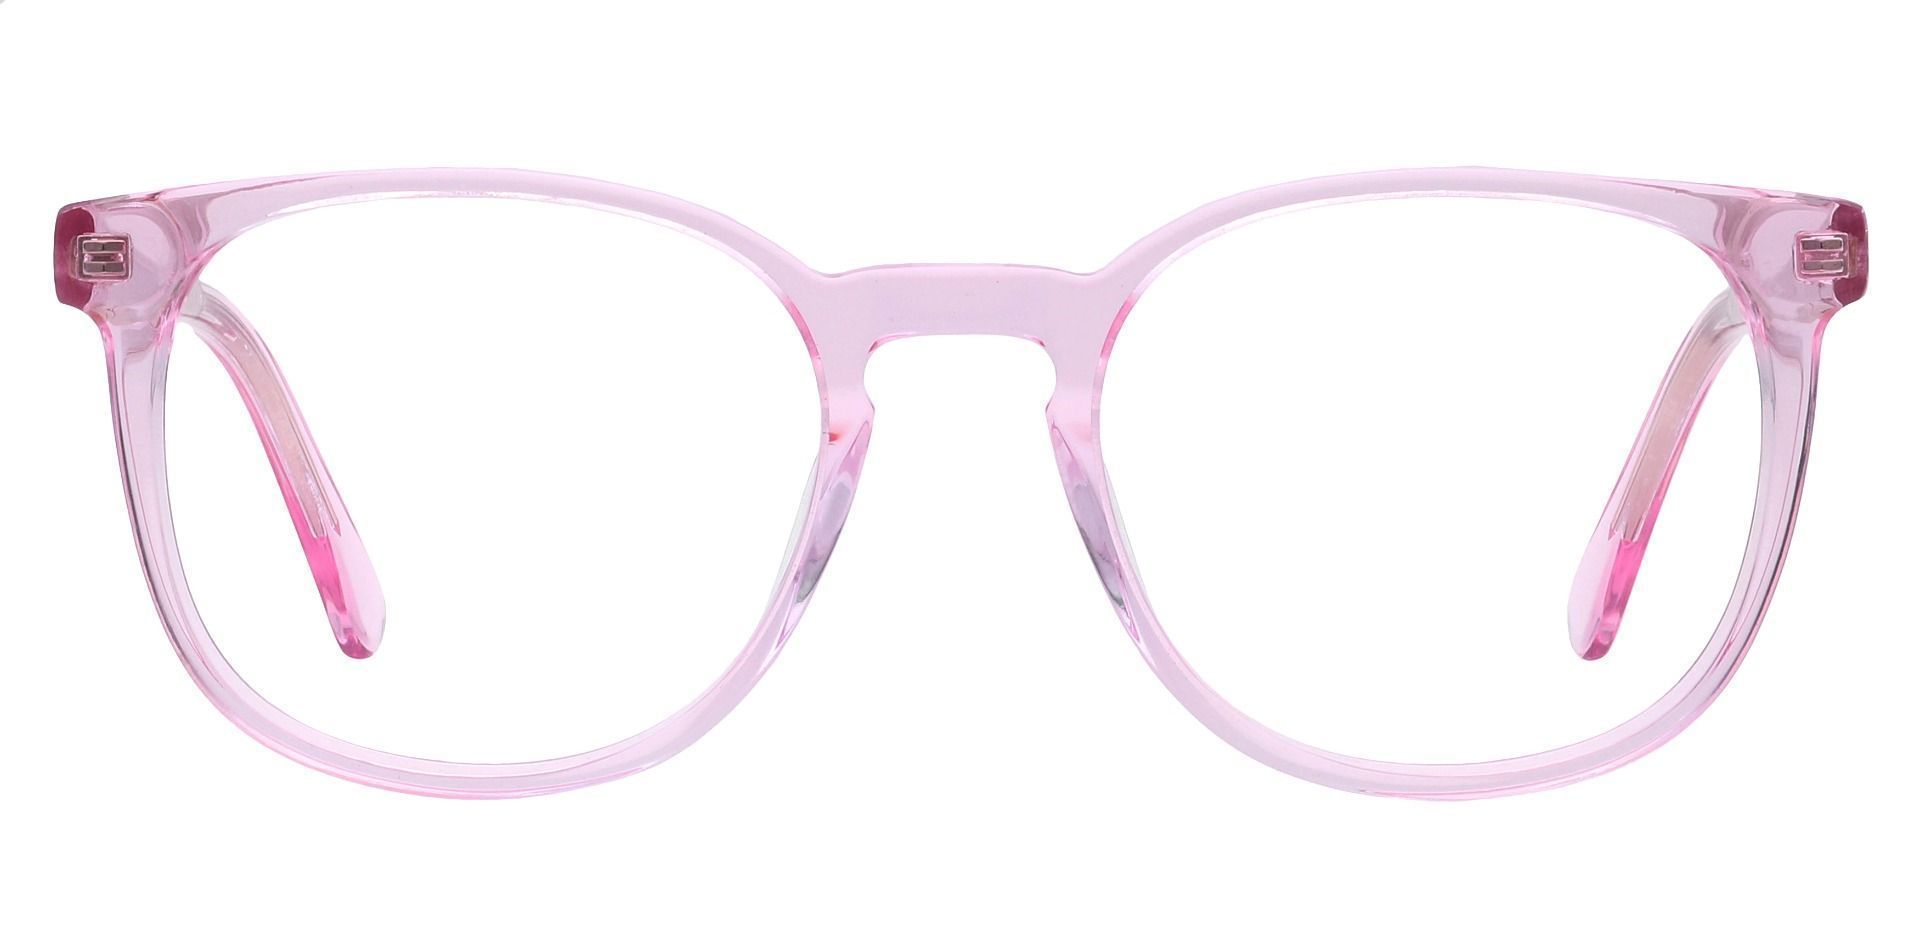 Nebula Round Reading Glasses - Pink